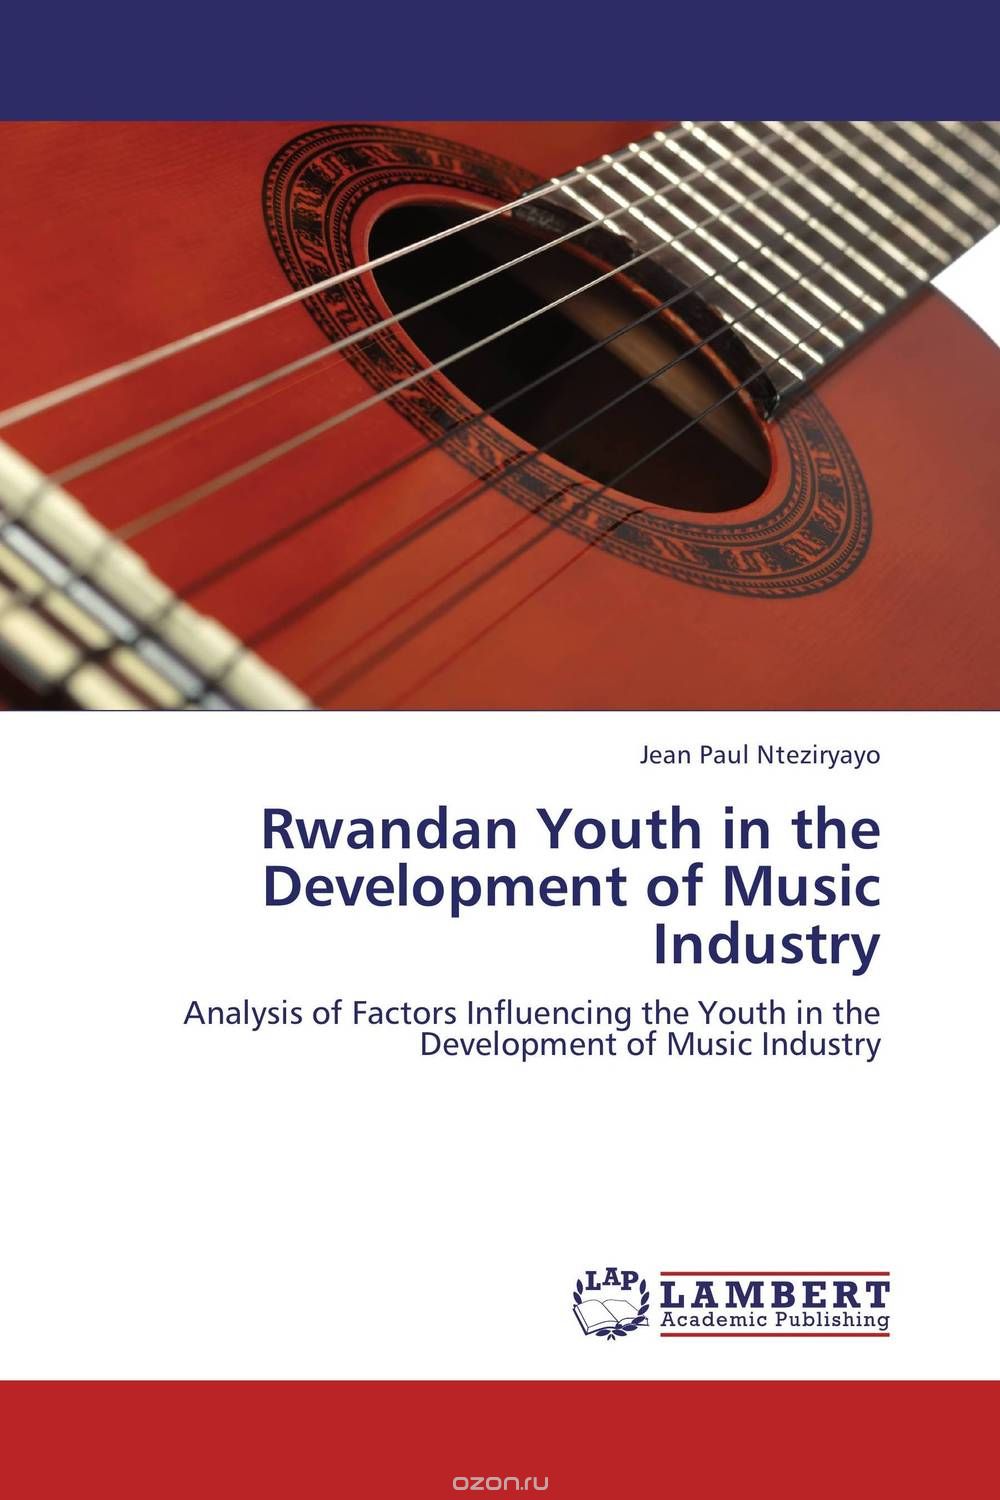 Скачать книгу "Rwandan Youth in the Development of Music Industry"